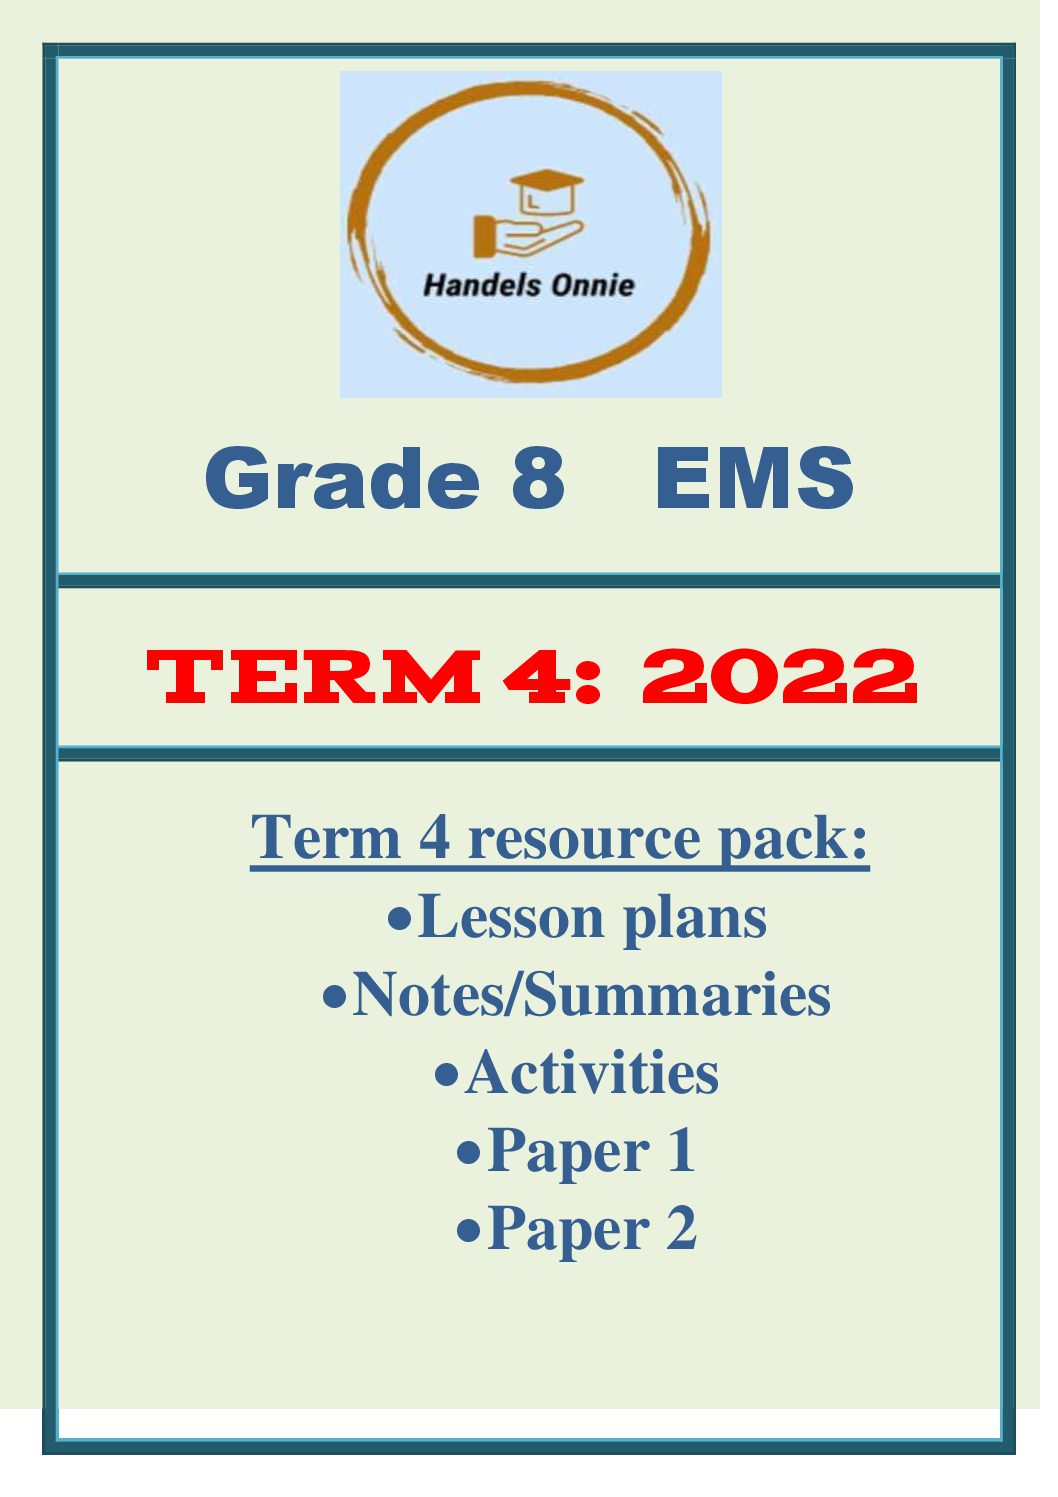 grade 8 assignment term 2 2022